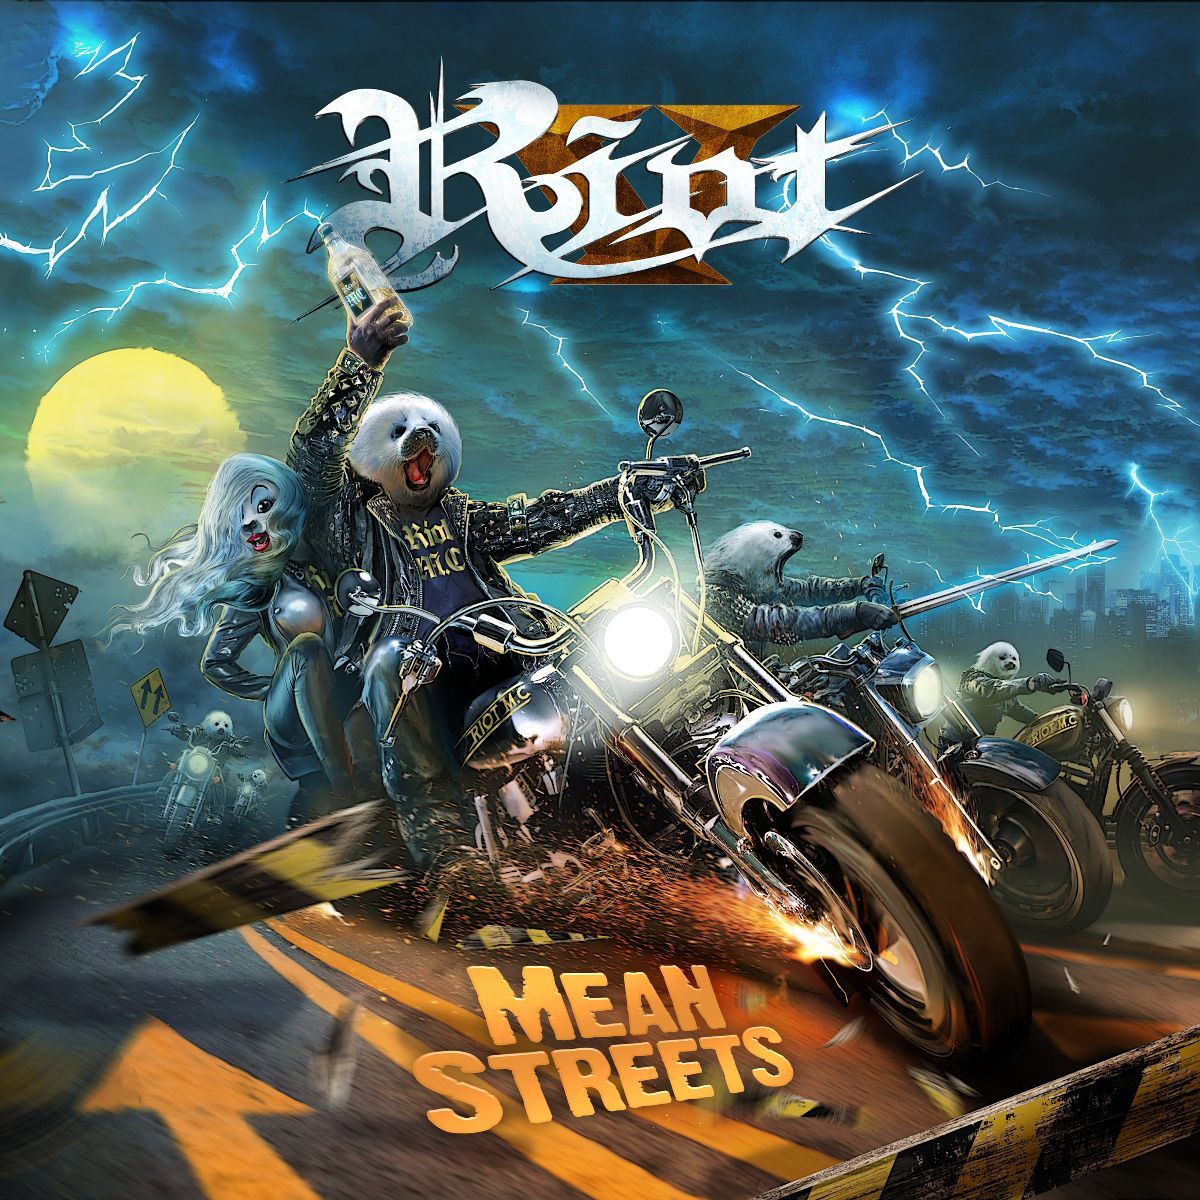 Riot V - "Mean Streets"